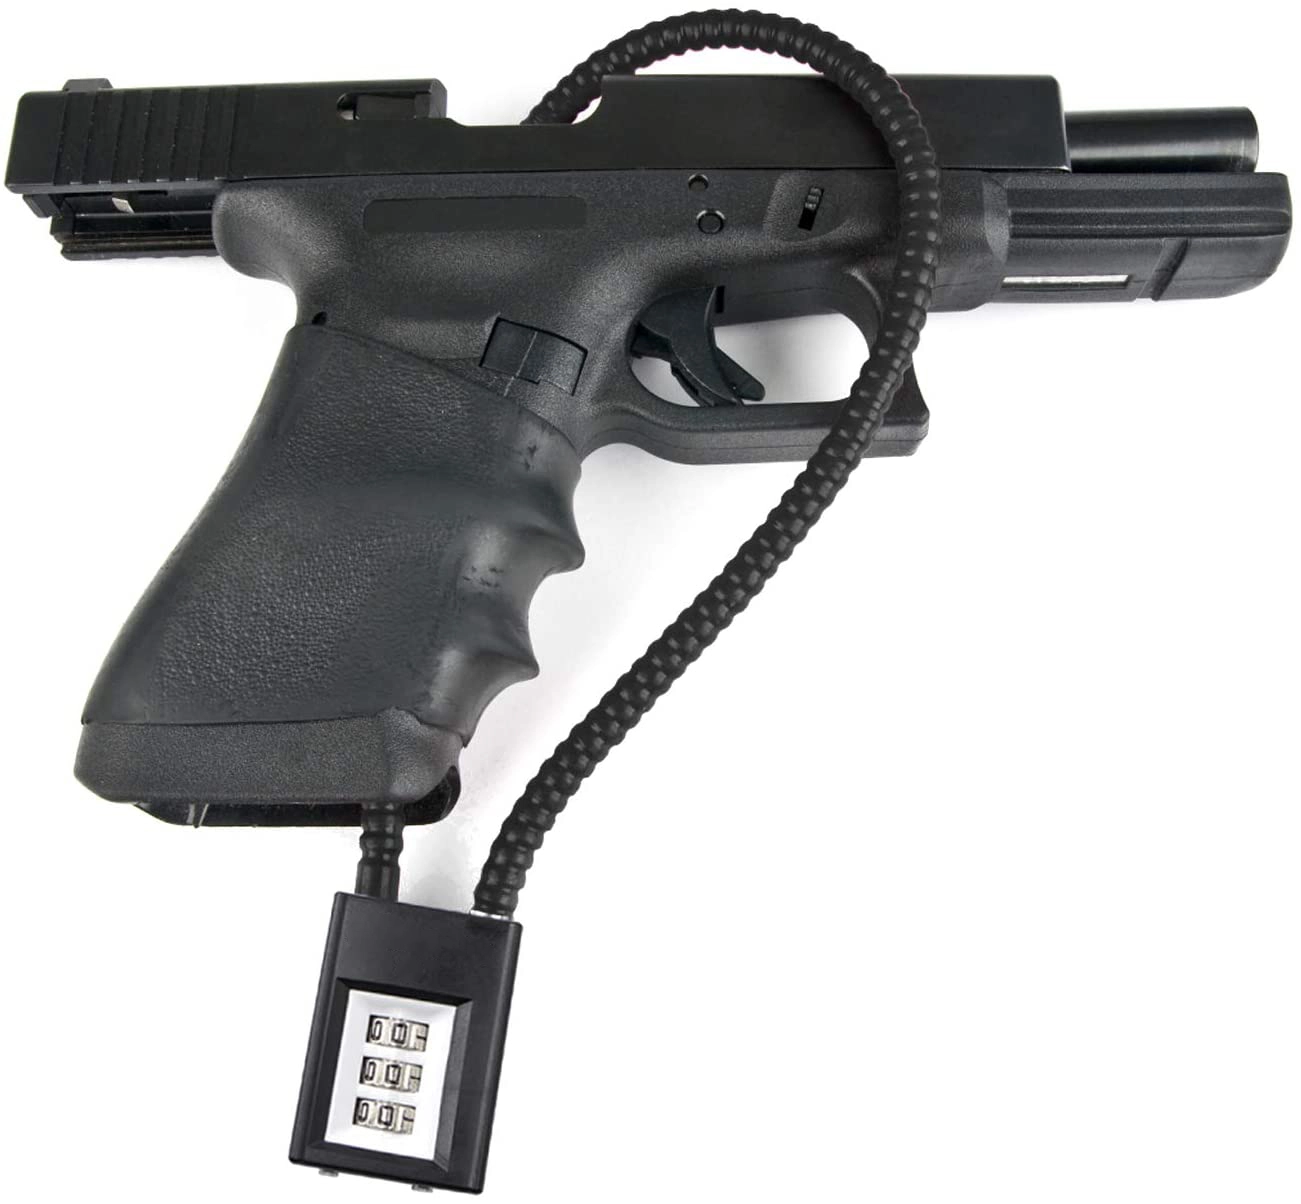 Trigger Lock 15'' Cable Gun Lock With Combination Lock Fits Pistols Hand Shotgun Rifles